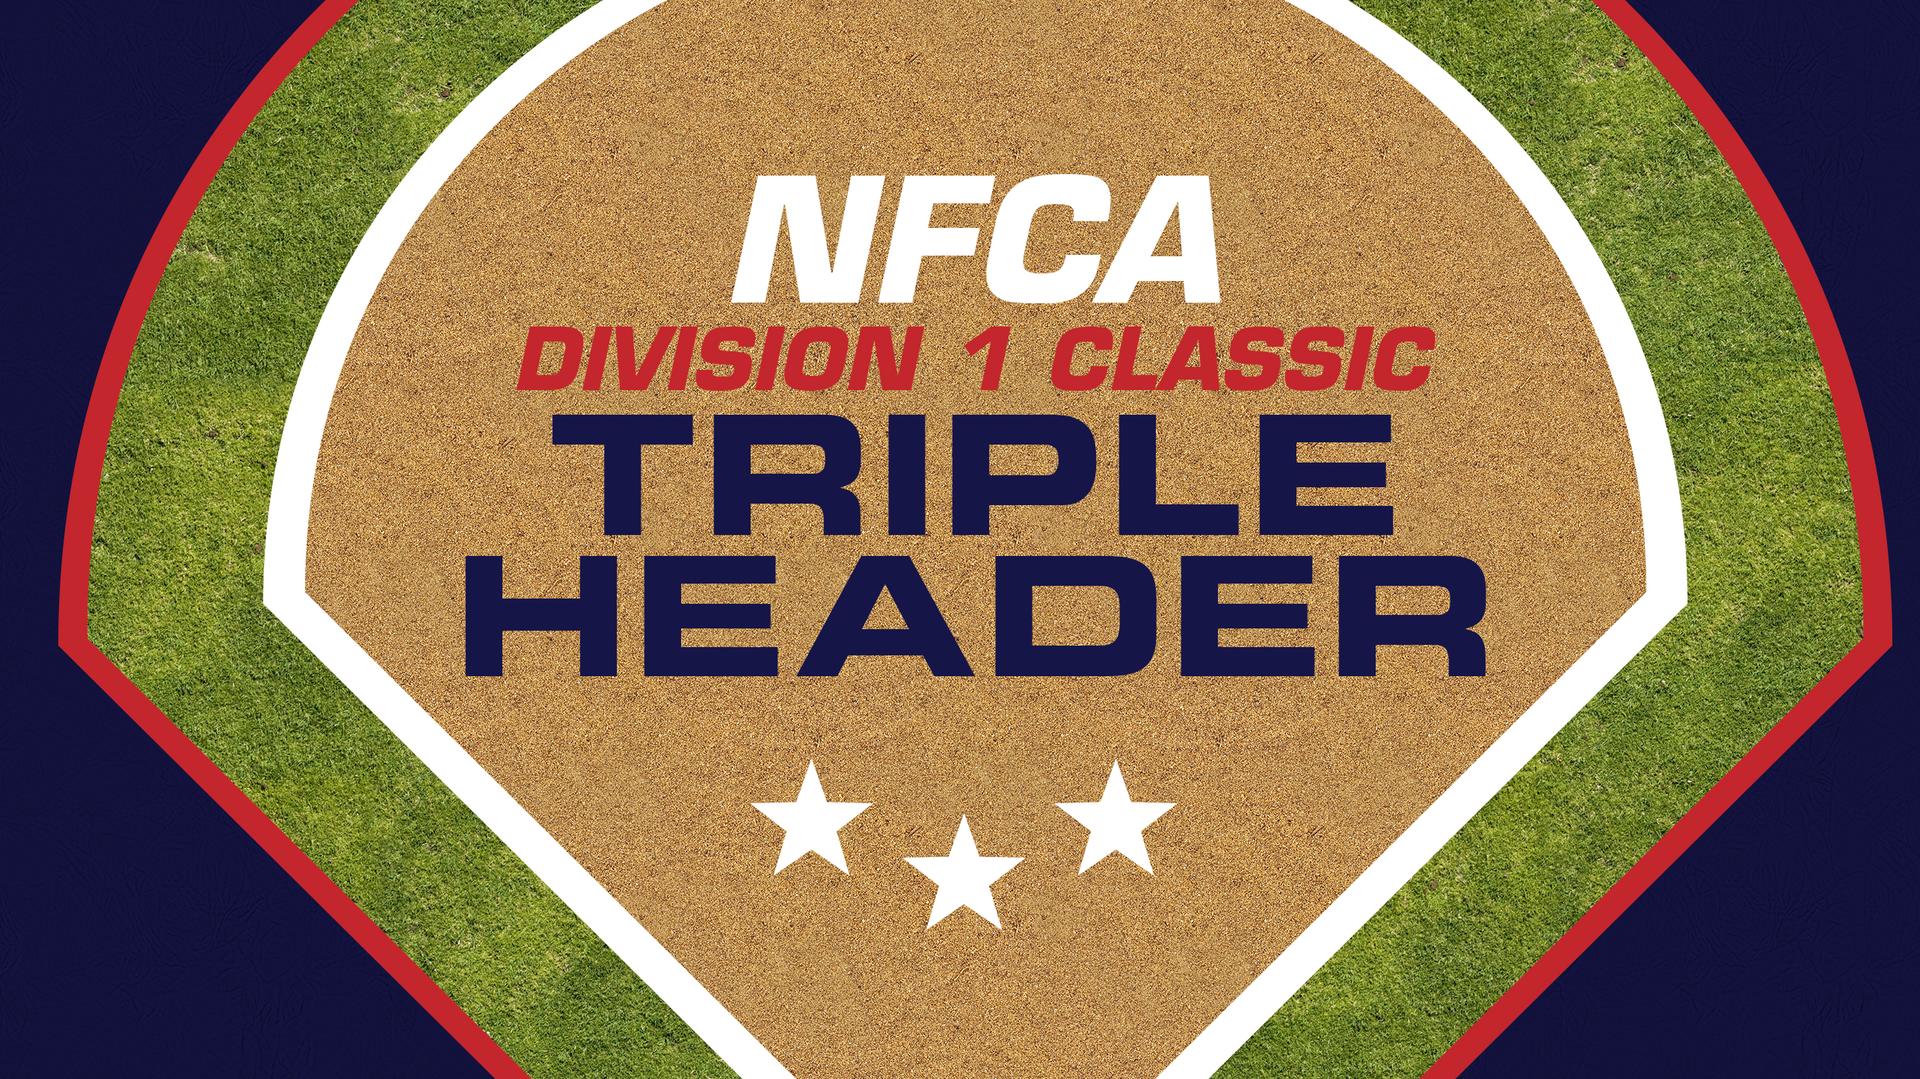 NFCA Division 1 Classic Tripleheader